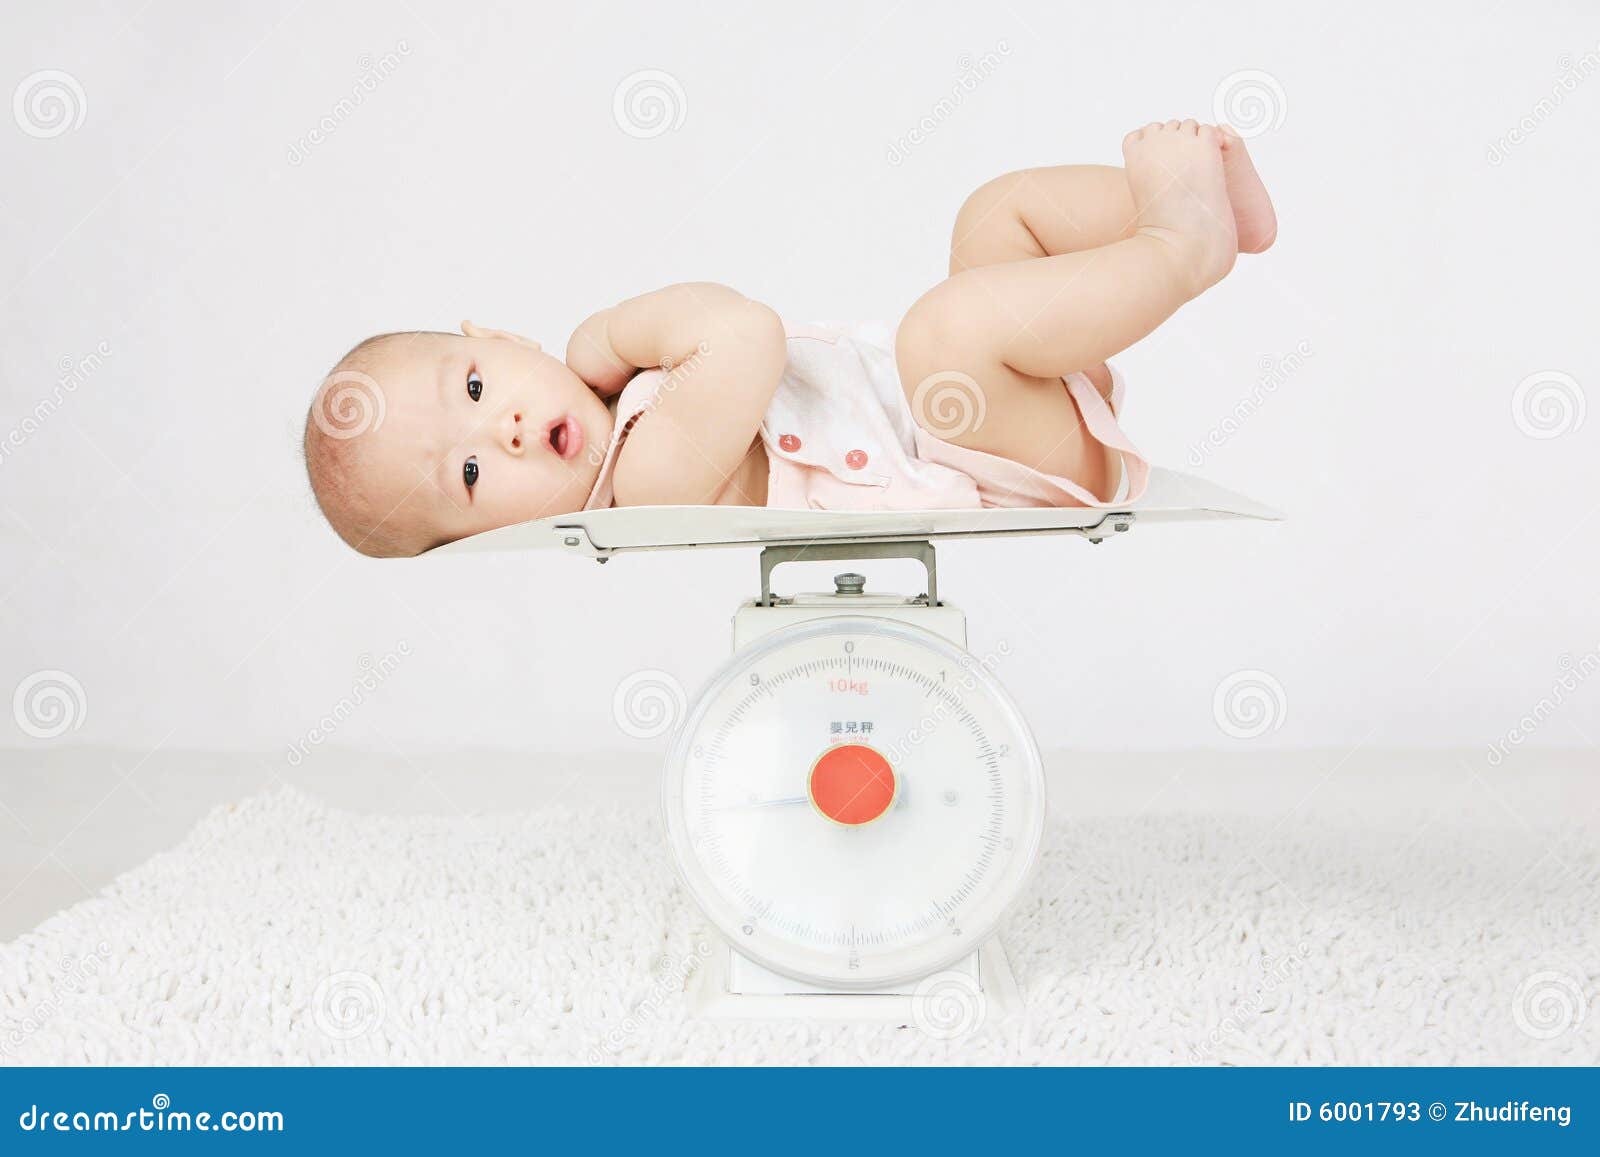 https://thumbs.dreamstime.com/z/baby-weighing-scale-6001793.jpg